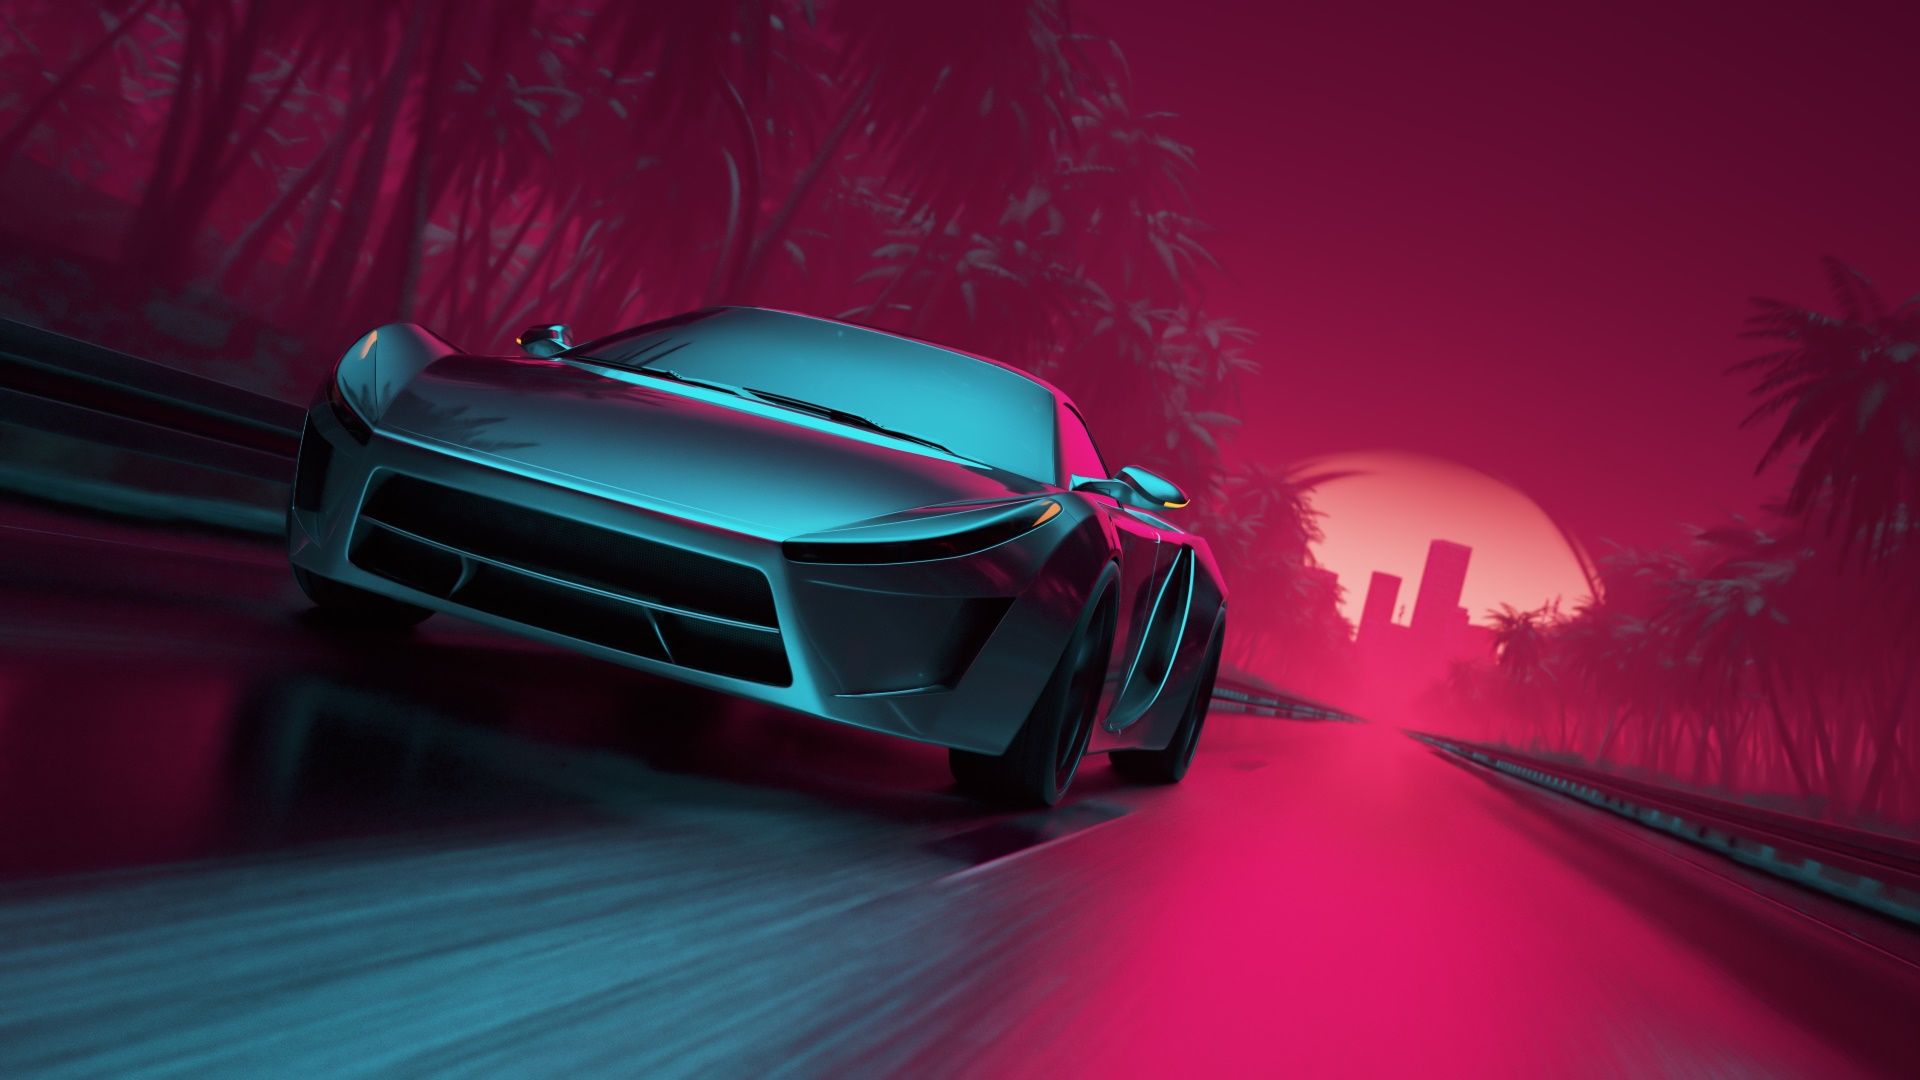 ArtStation - Neon Futuristic Car 21 - 30 | Wallpaper Background